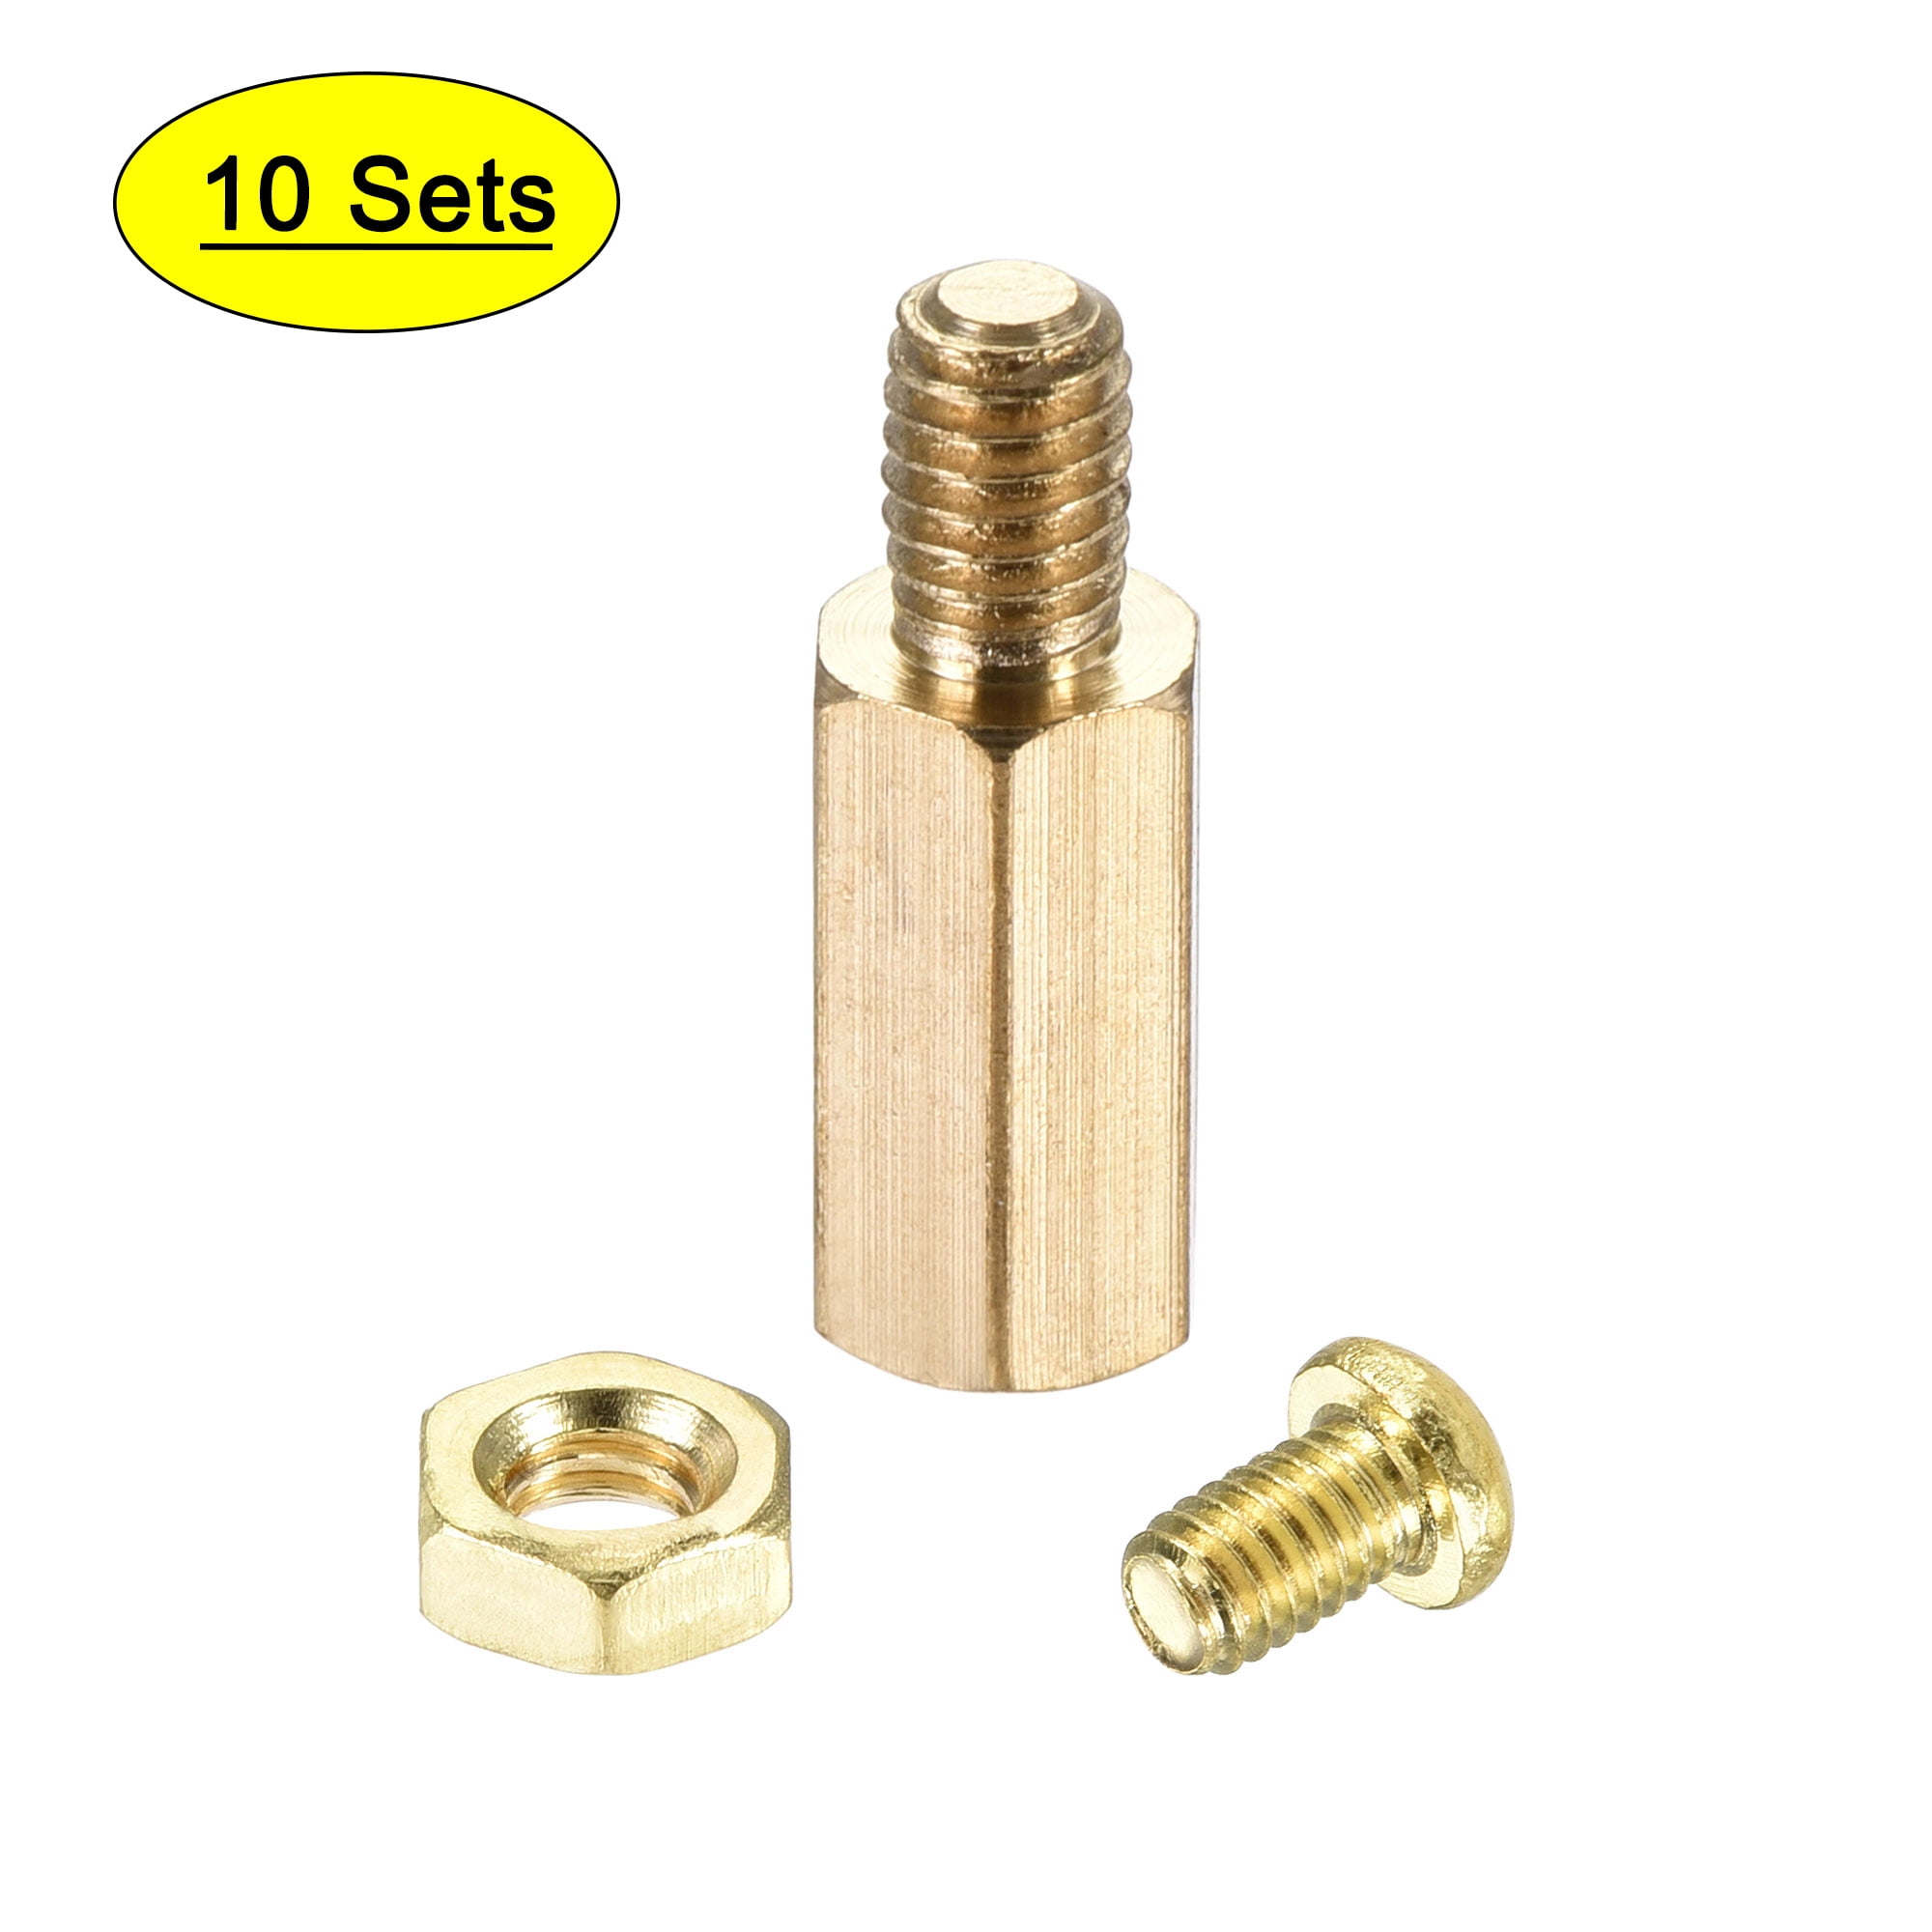 Uxcell Brass M4 15mm+6mm Male-Female Hex Standoff Screw Nut Kit 10 Sets 